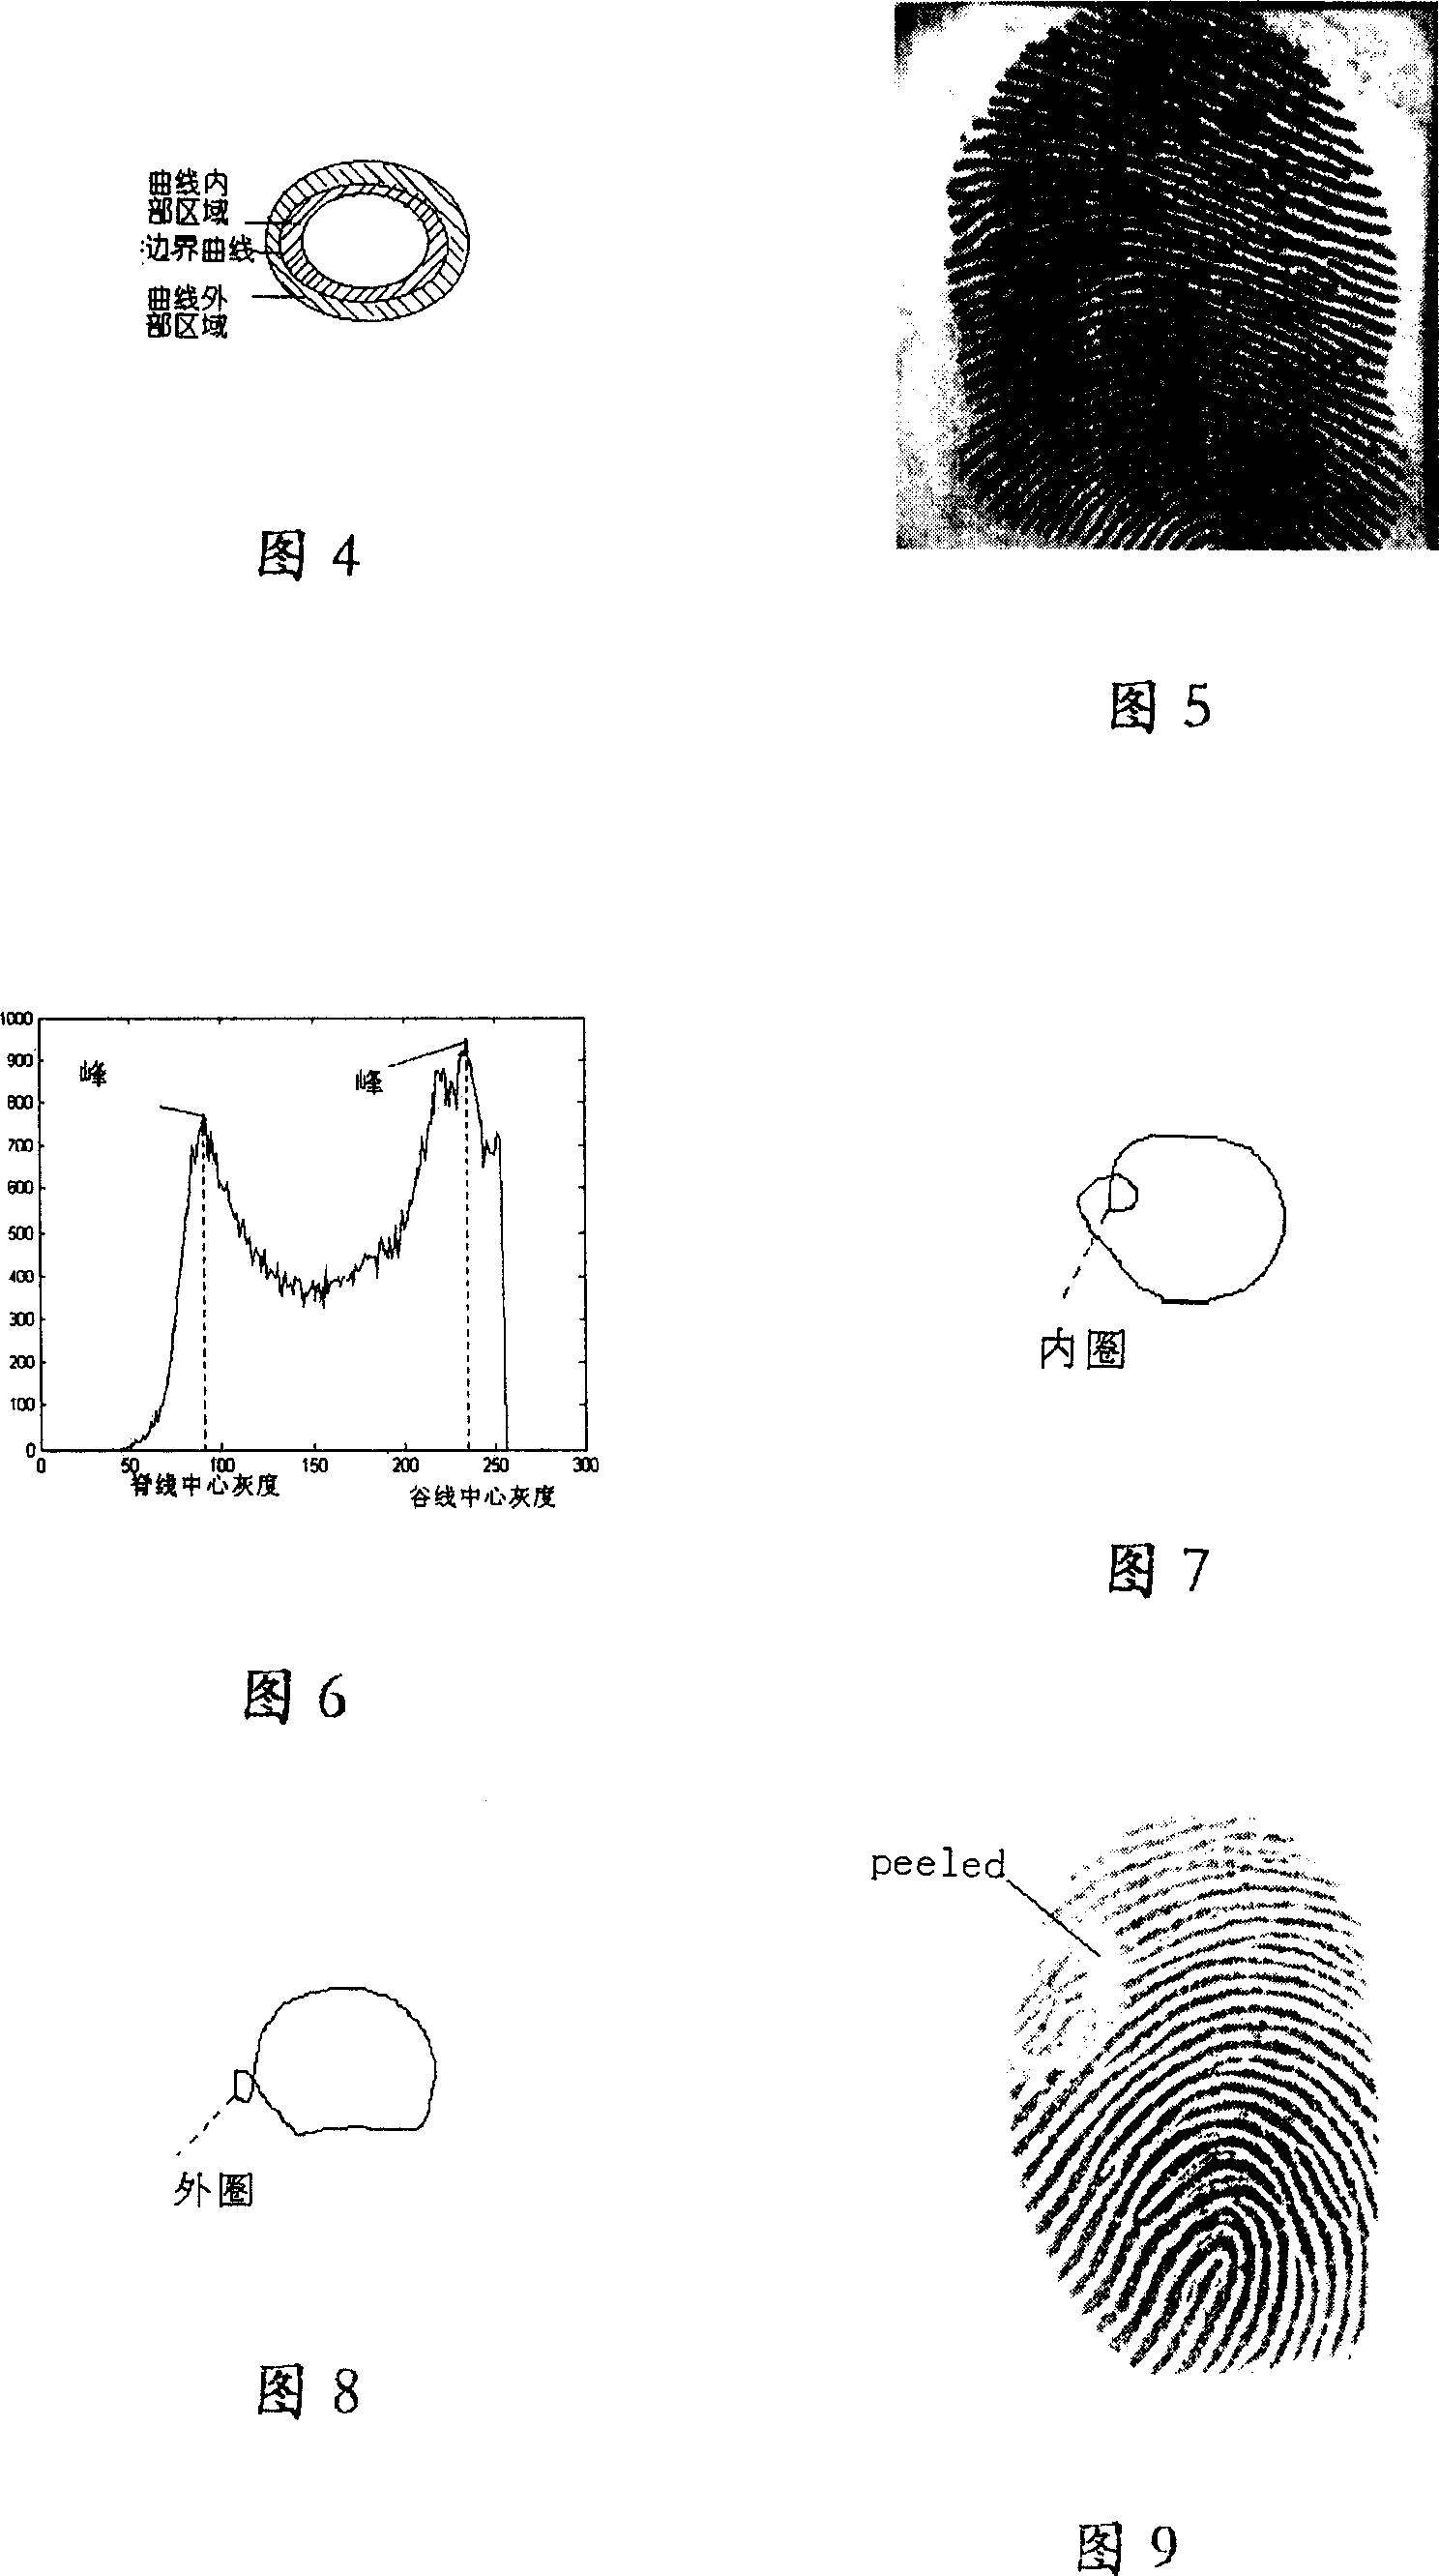 Image segmentation and fingerprint line distance getting technique in automatic fingerprint identification method